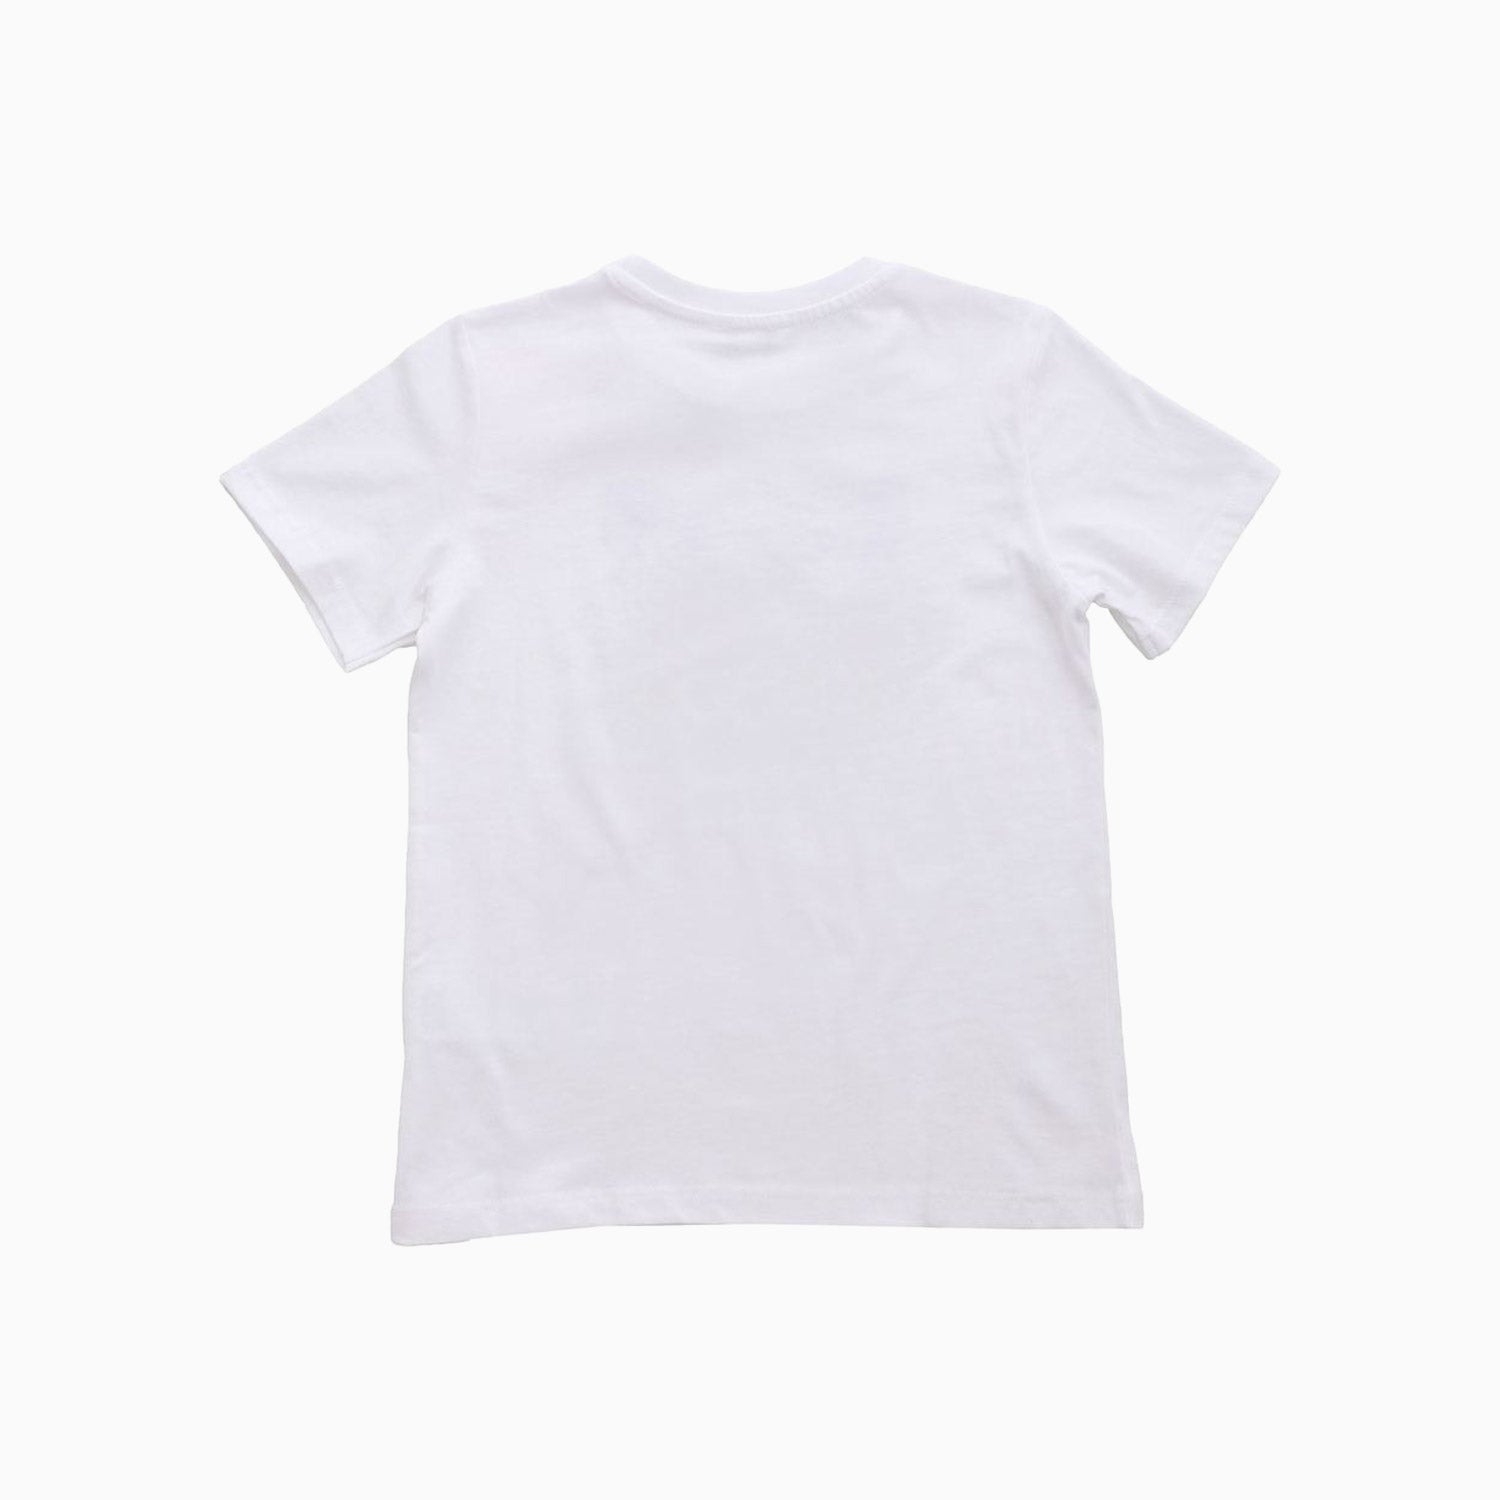 Kenzo Kid's JB B1 Tiger Short Sleeve T Shirt - Color: Optic White - Kids Premium Clothing -